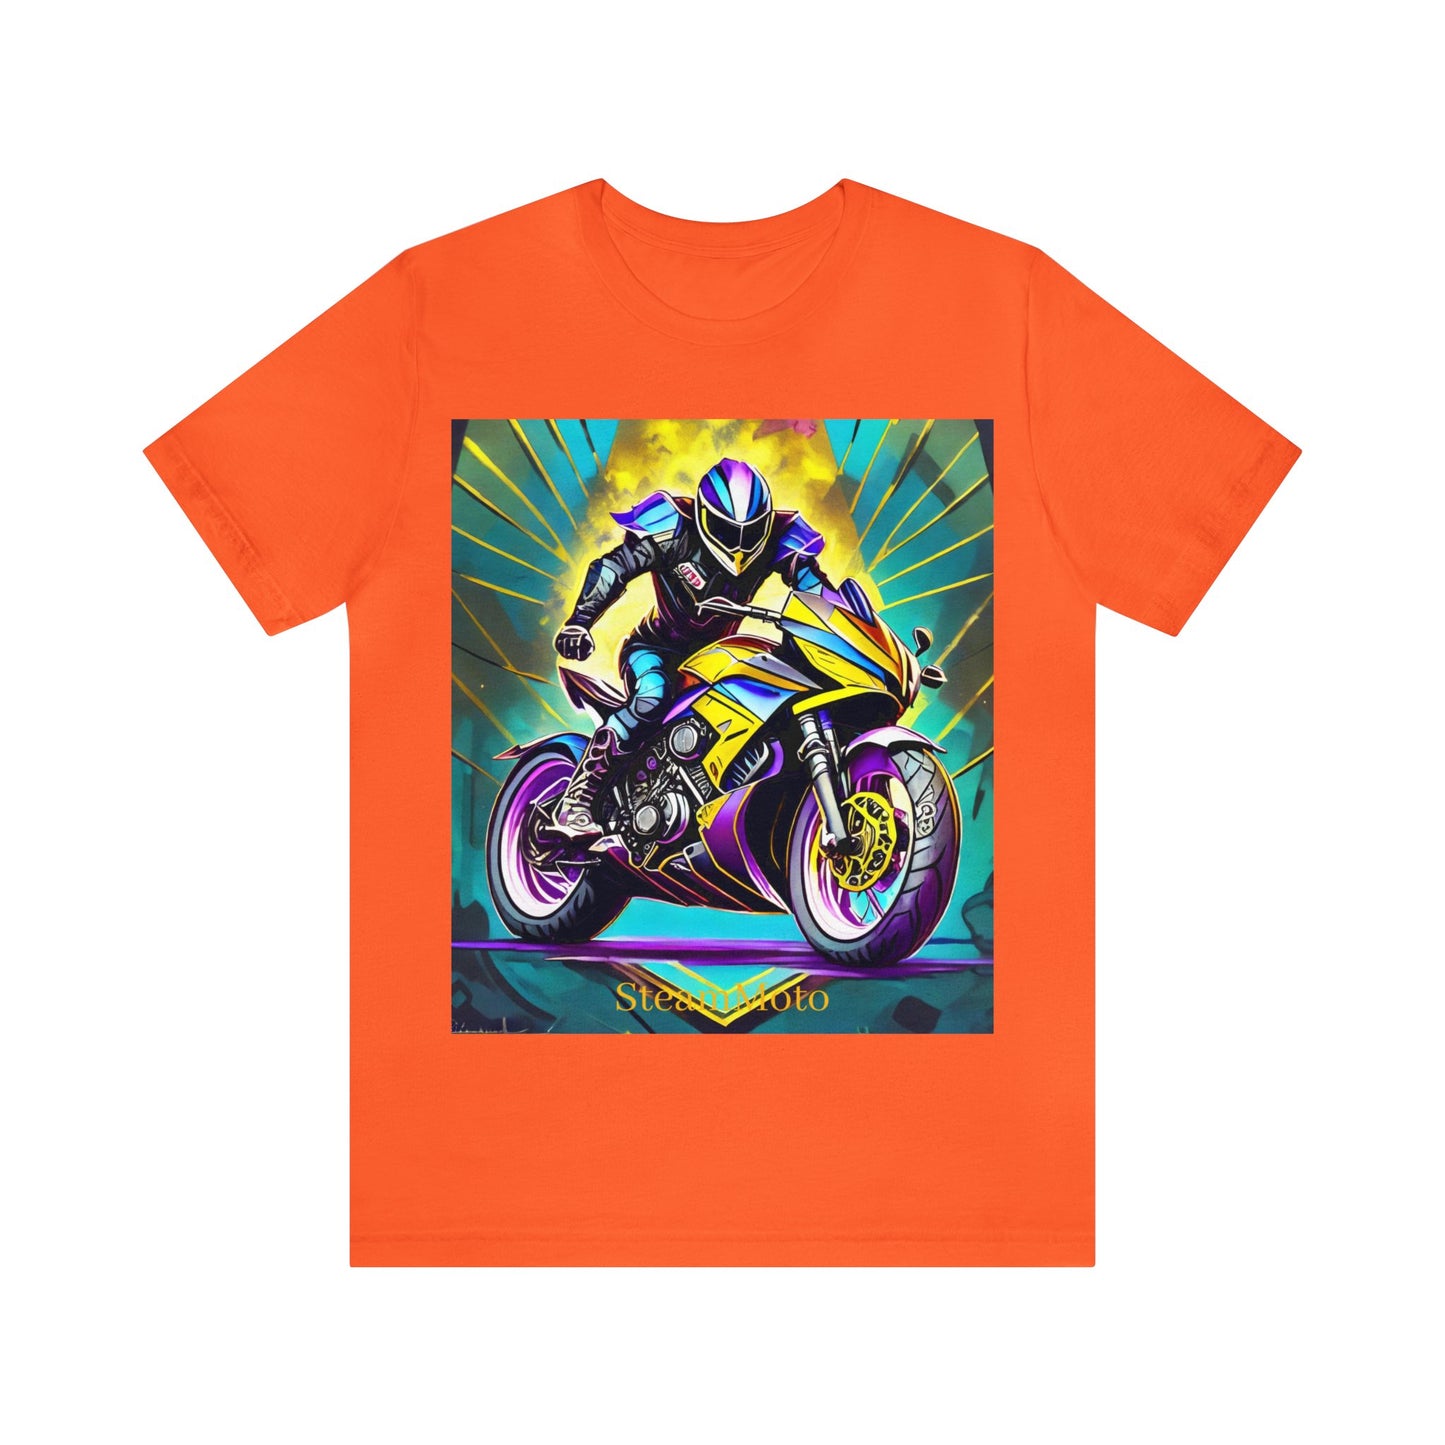 Unisex adult Jersey Short Sleeve Tee Gearhead Riderwear Motorcycle styled Steampunk t shirt